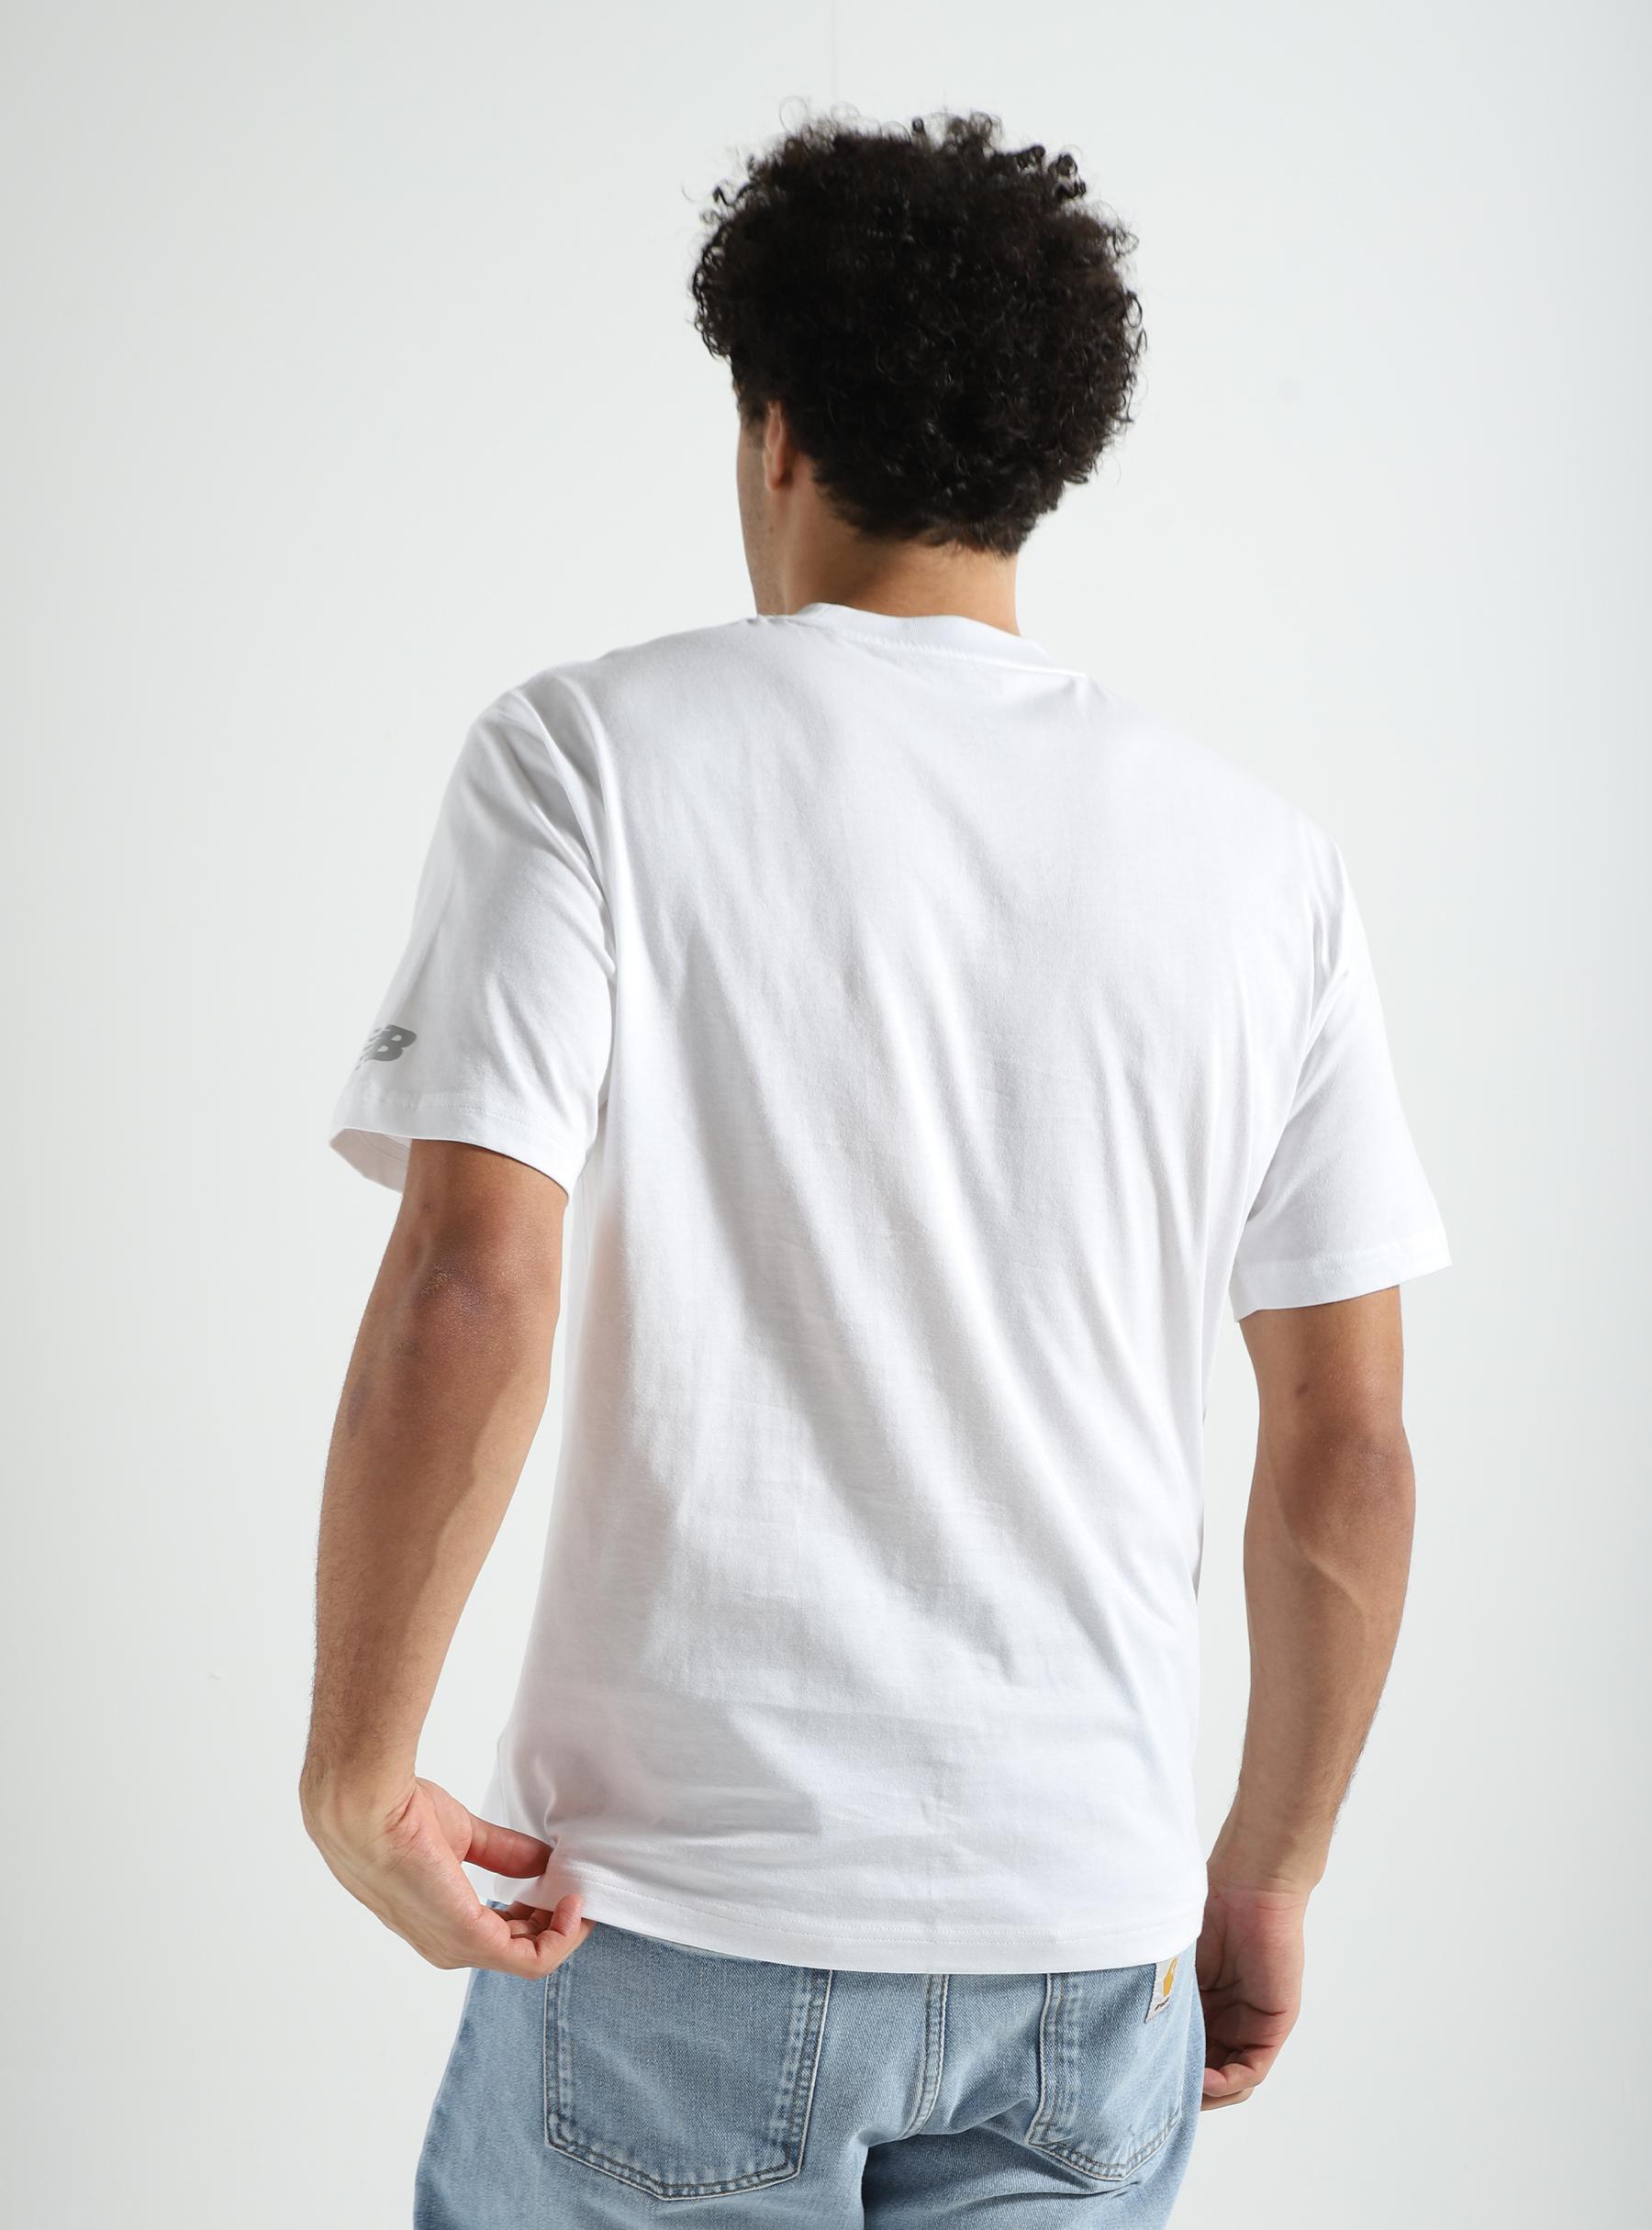 New Balance Graphic T-shirt White MT41519-WT